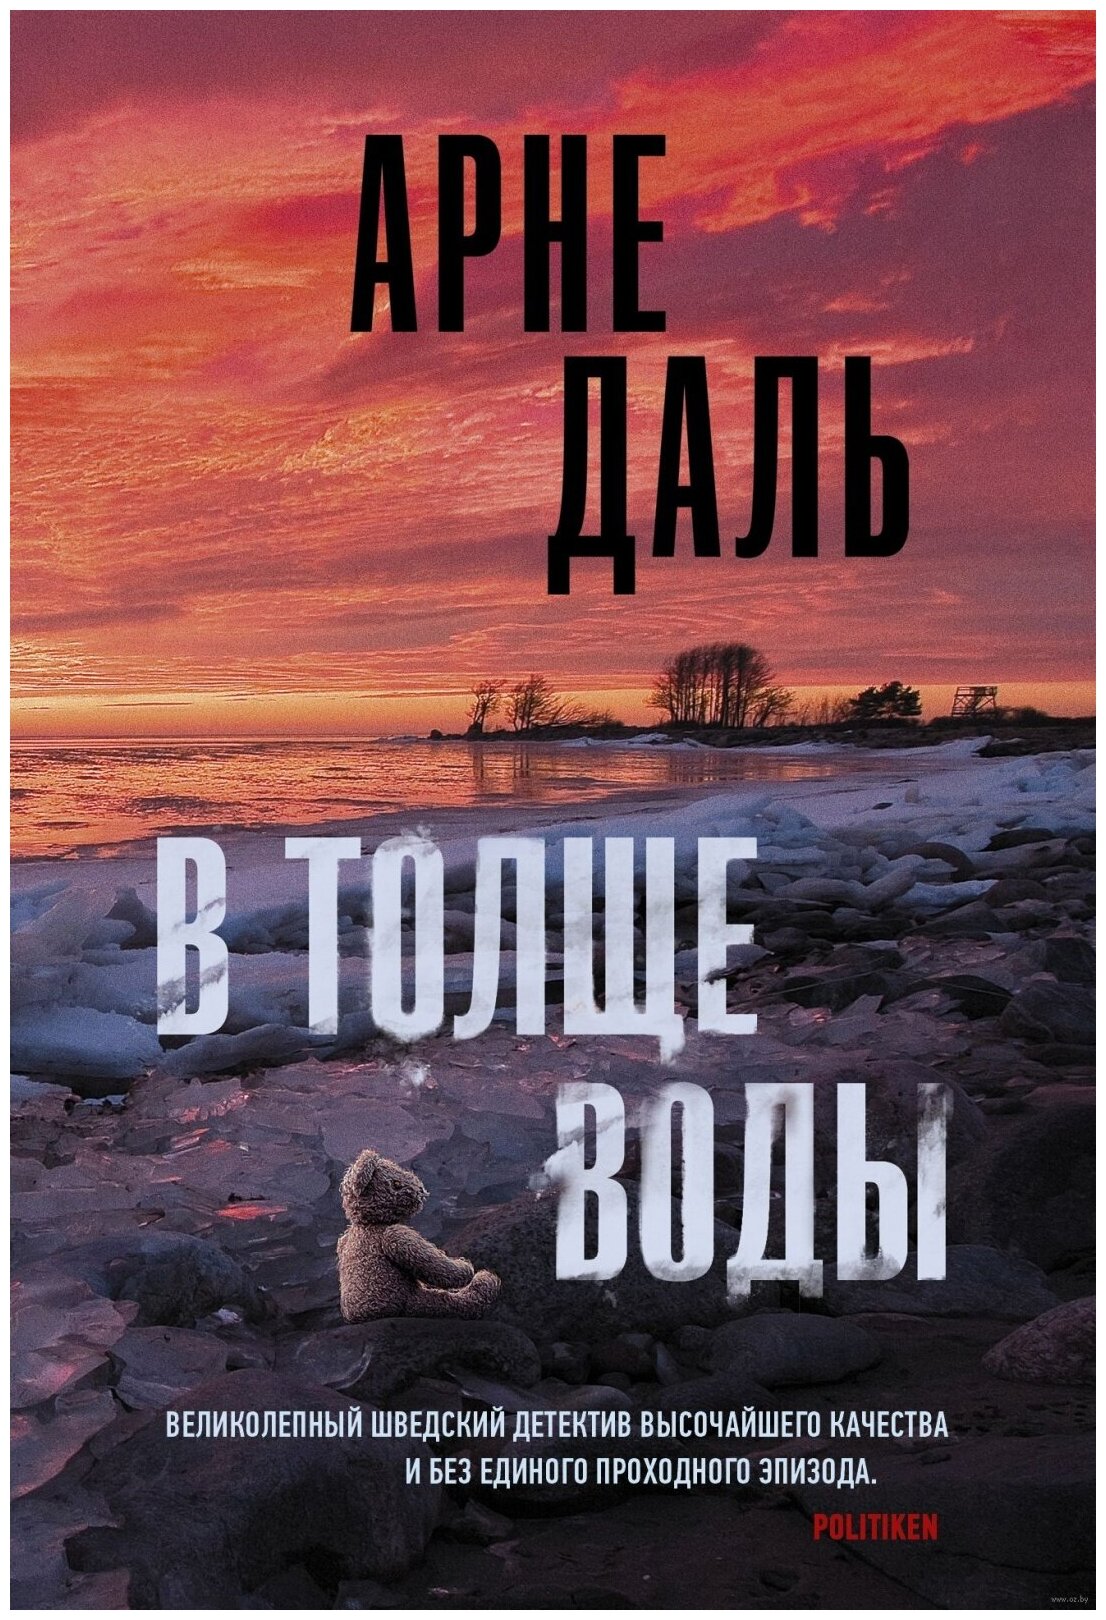 Книга АСТ Даль А. "В толще воды", 2021, 384 стр